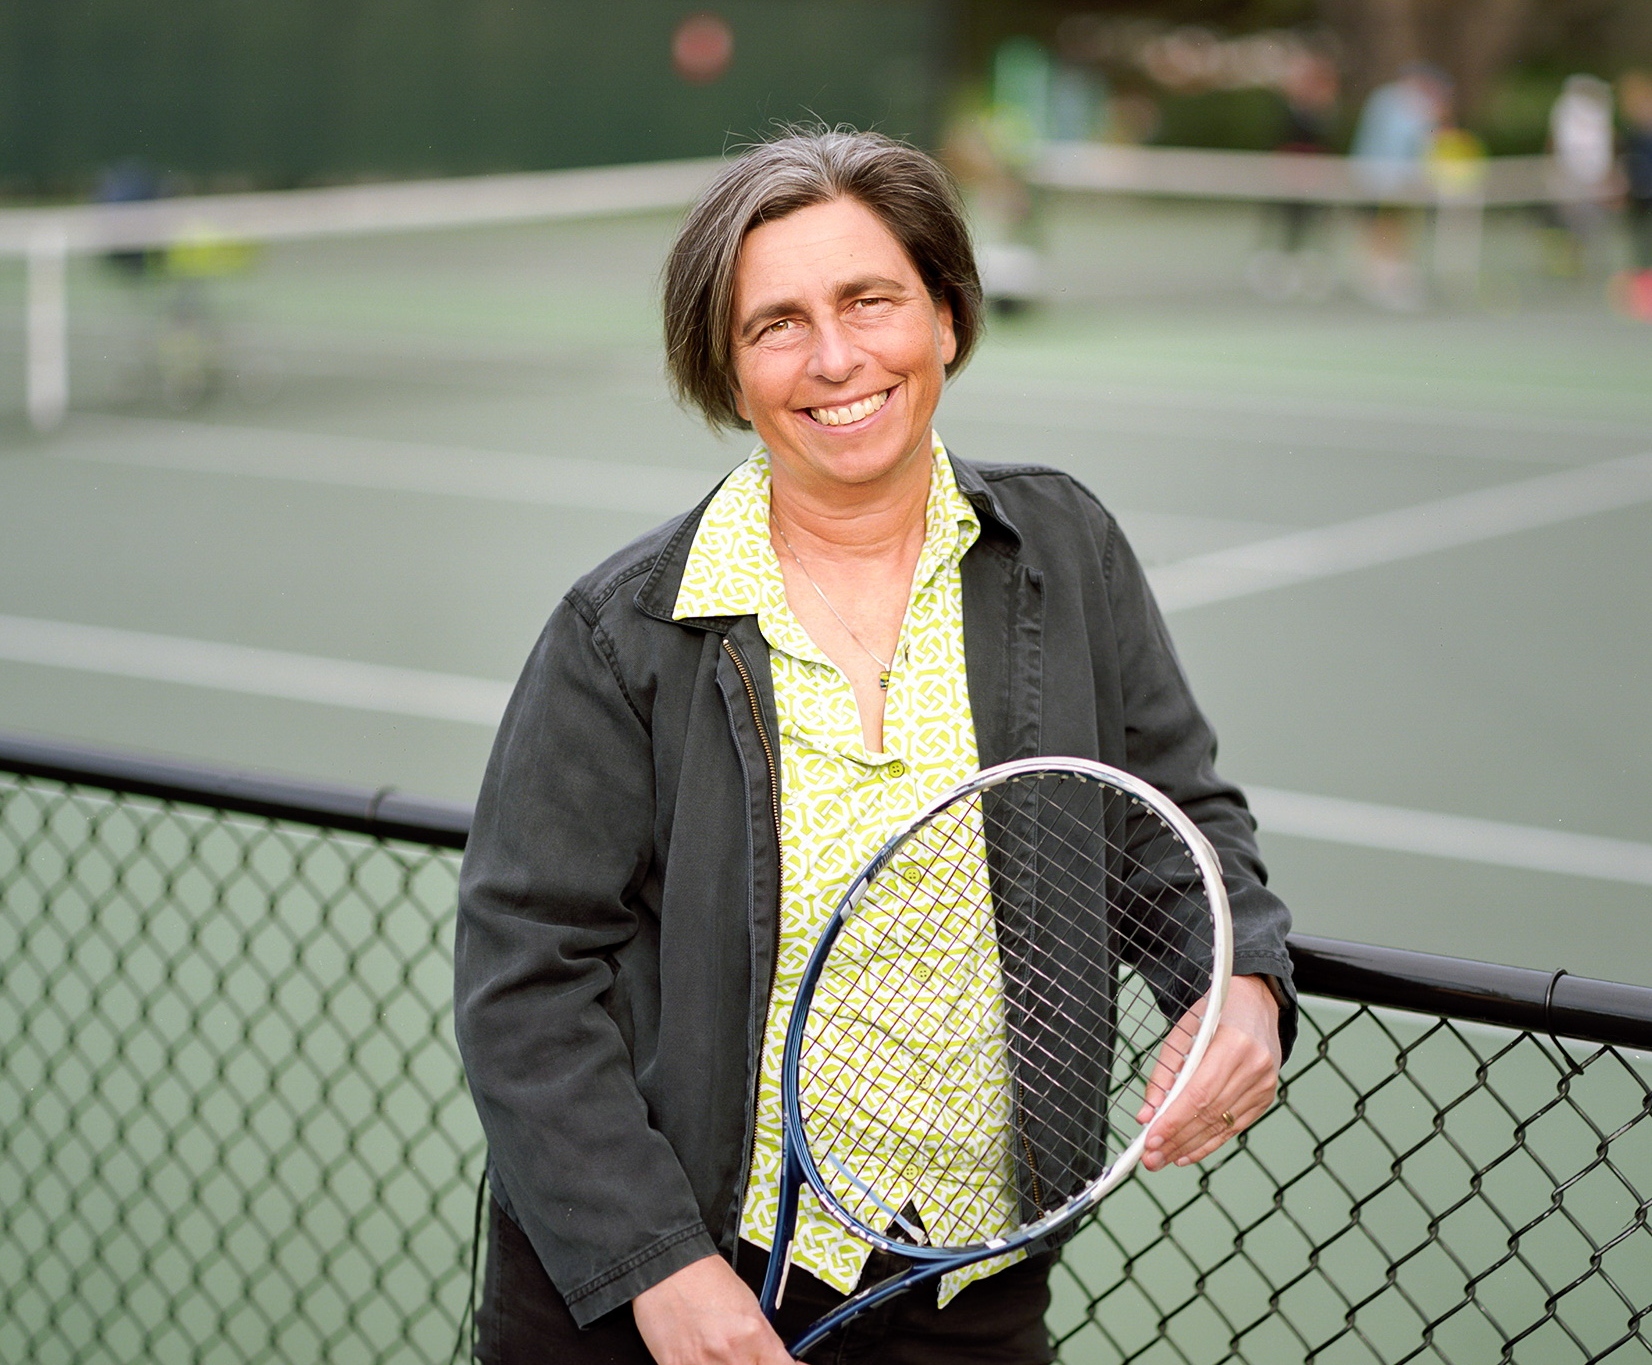 Martha Ehrenfeld at the Tennis Center